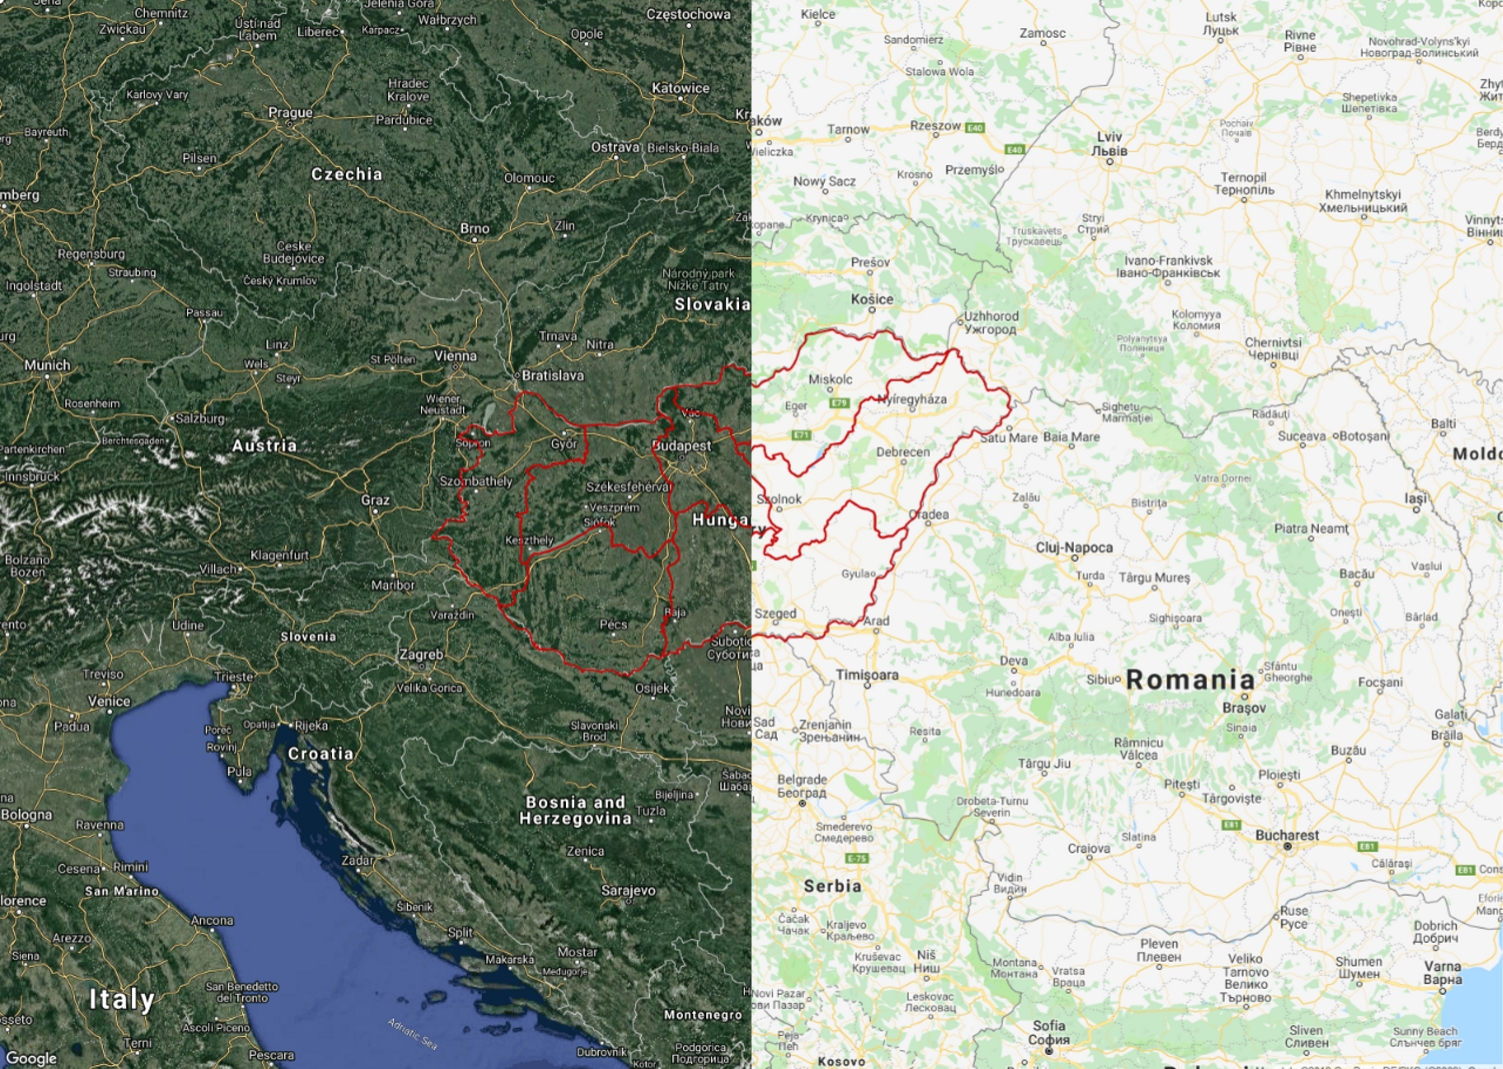 The Hungarian Region Boundaries